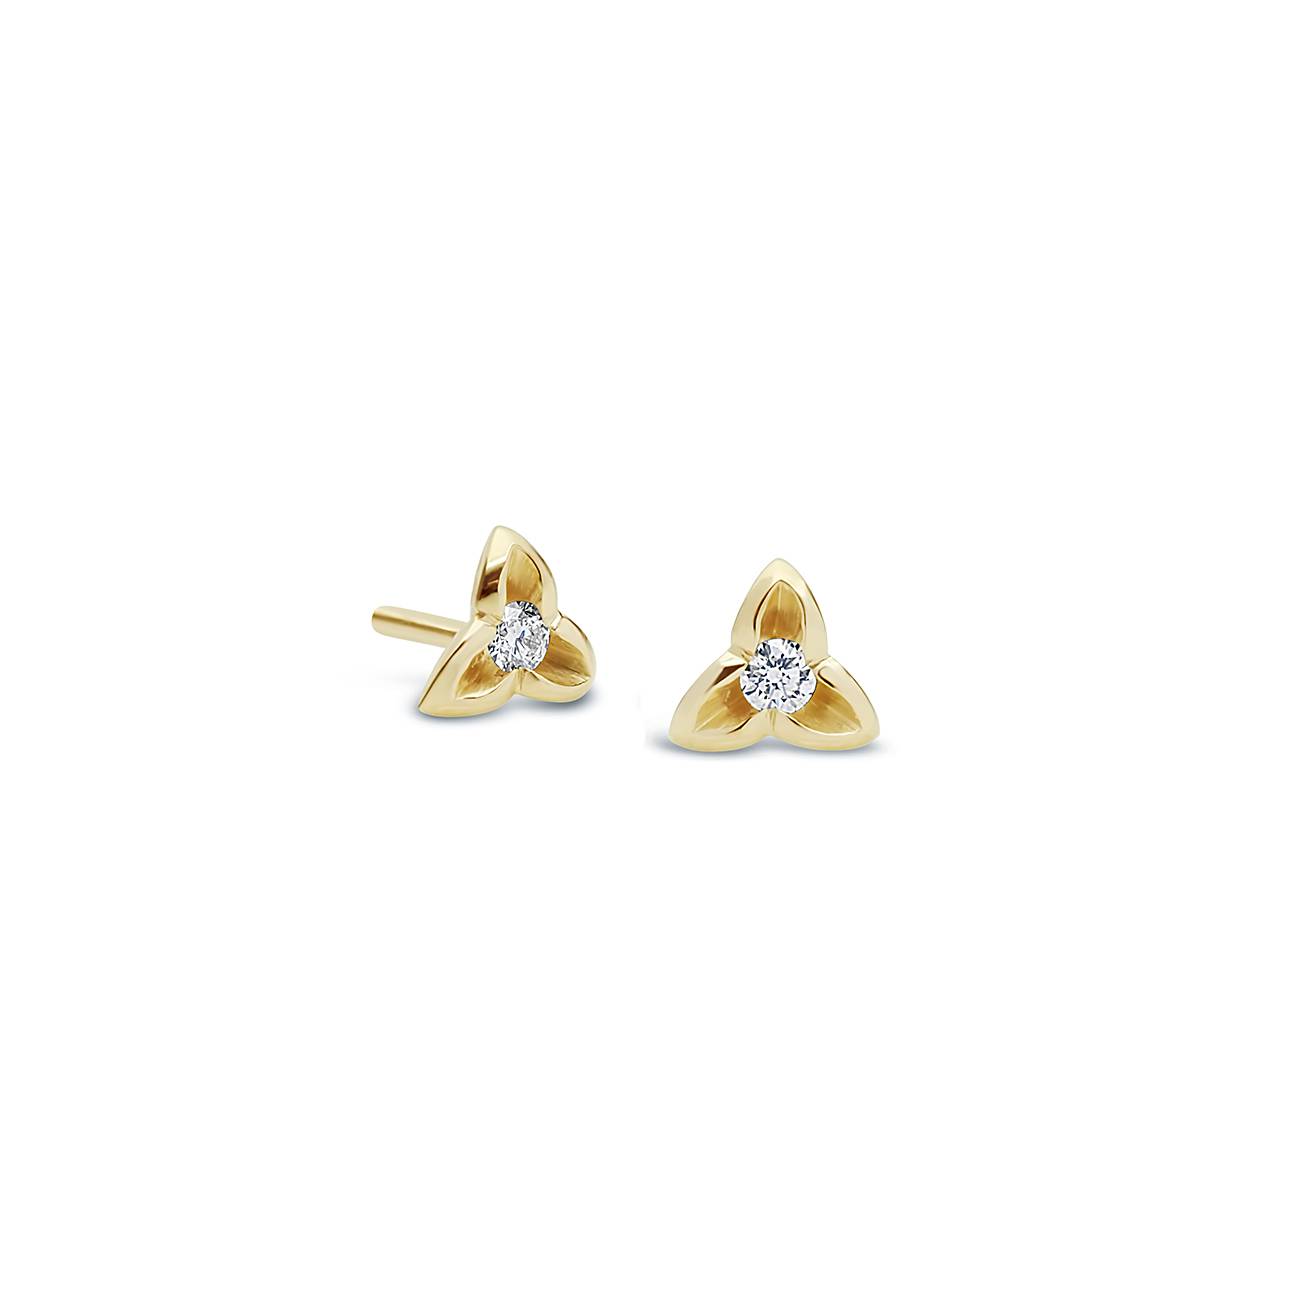 Wild Iris 18ct Yellow Gold Stud Earrings #1 Diamond Set - Bretts Jewellers